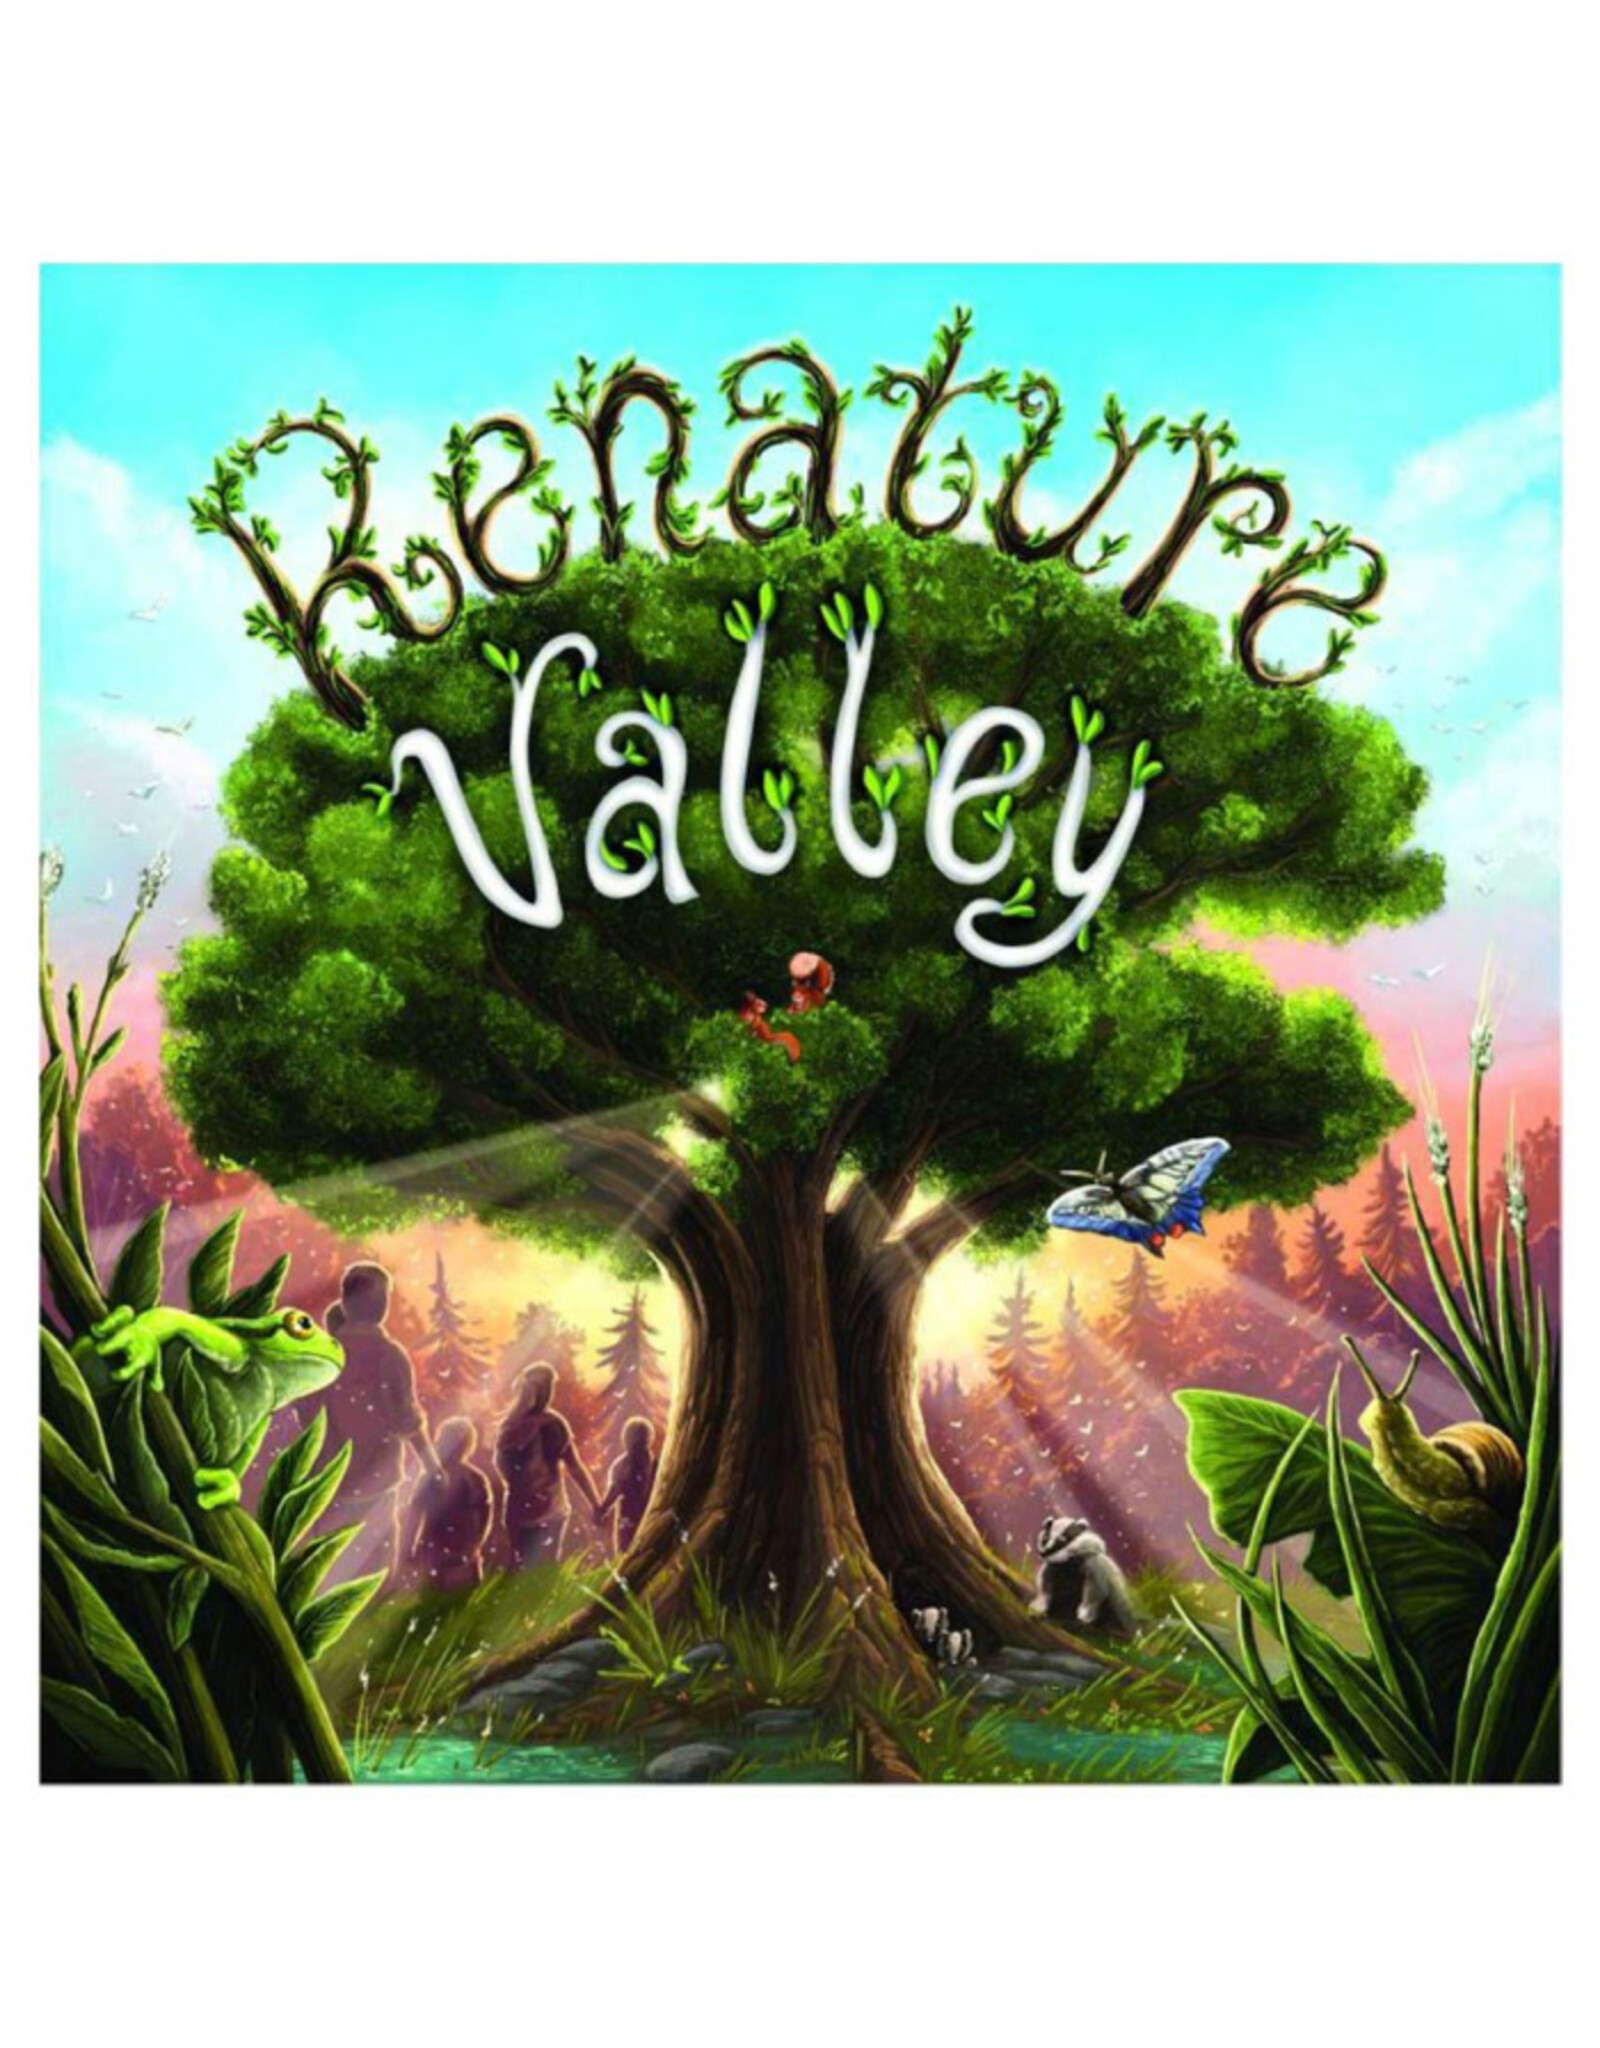 Capstone Games Renature Valley Expansion